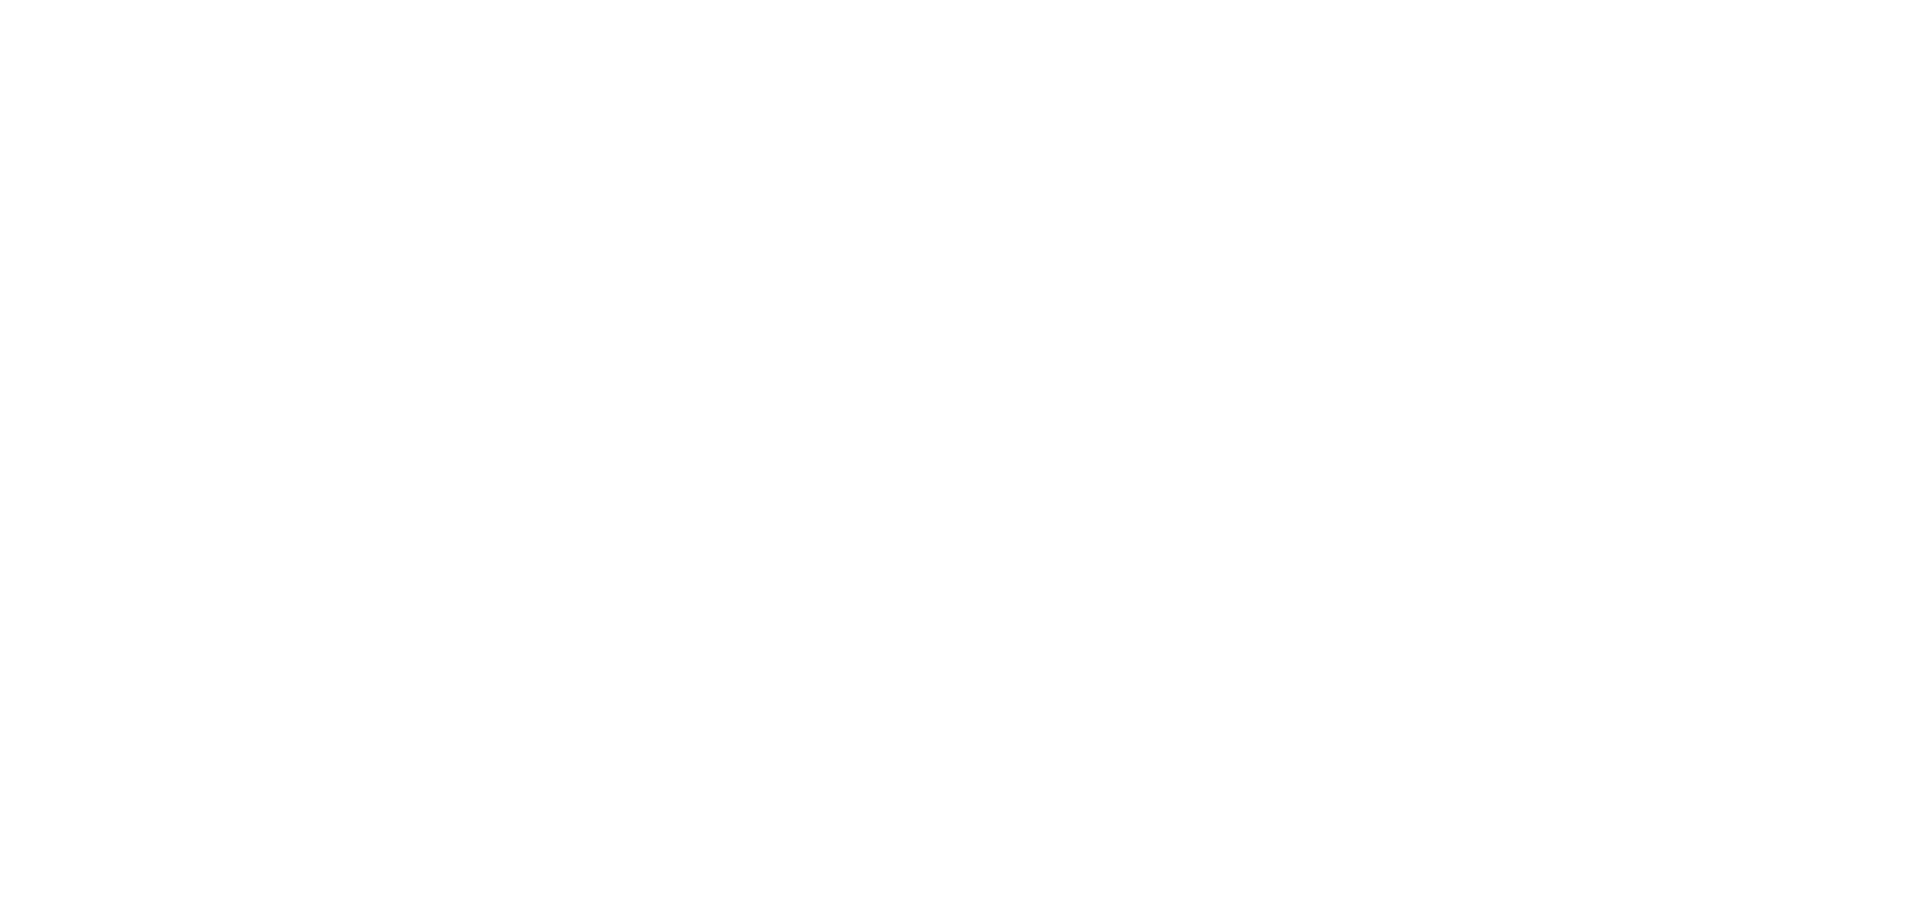 Дизайн логотипа Knob House премиум